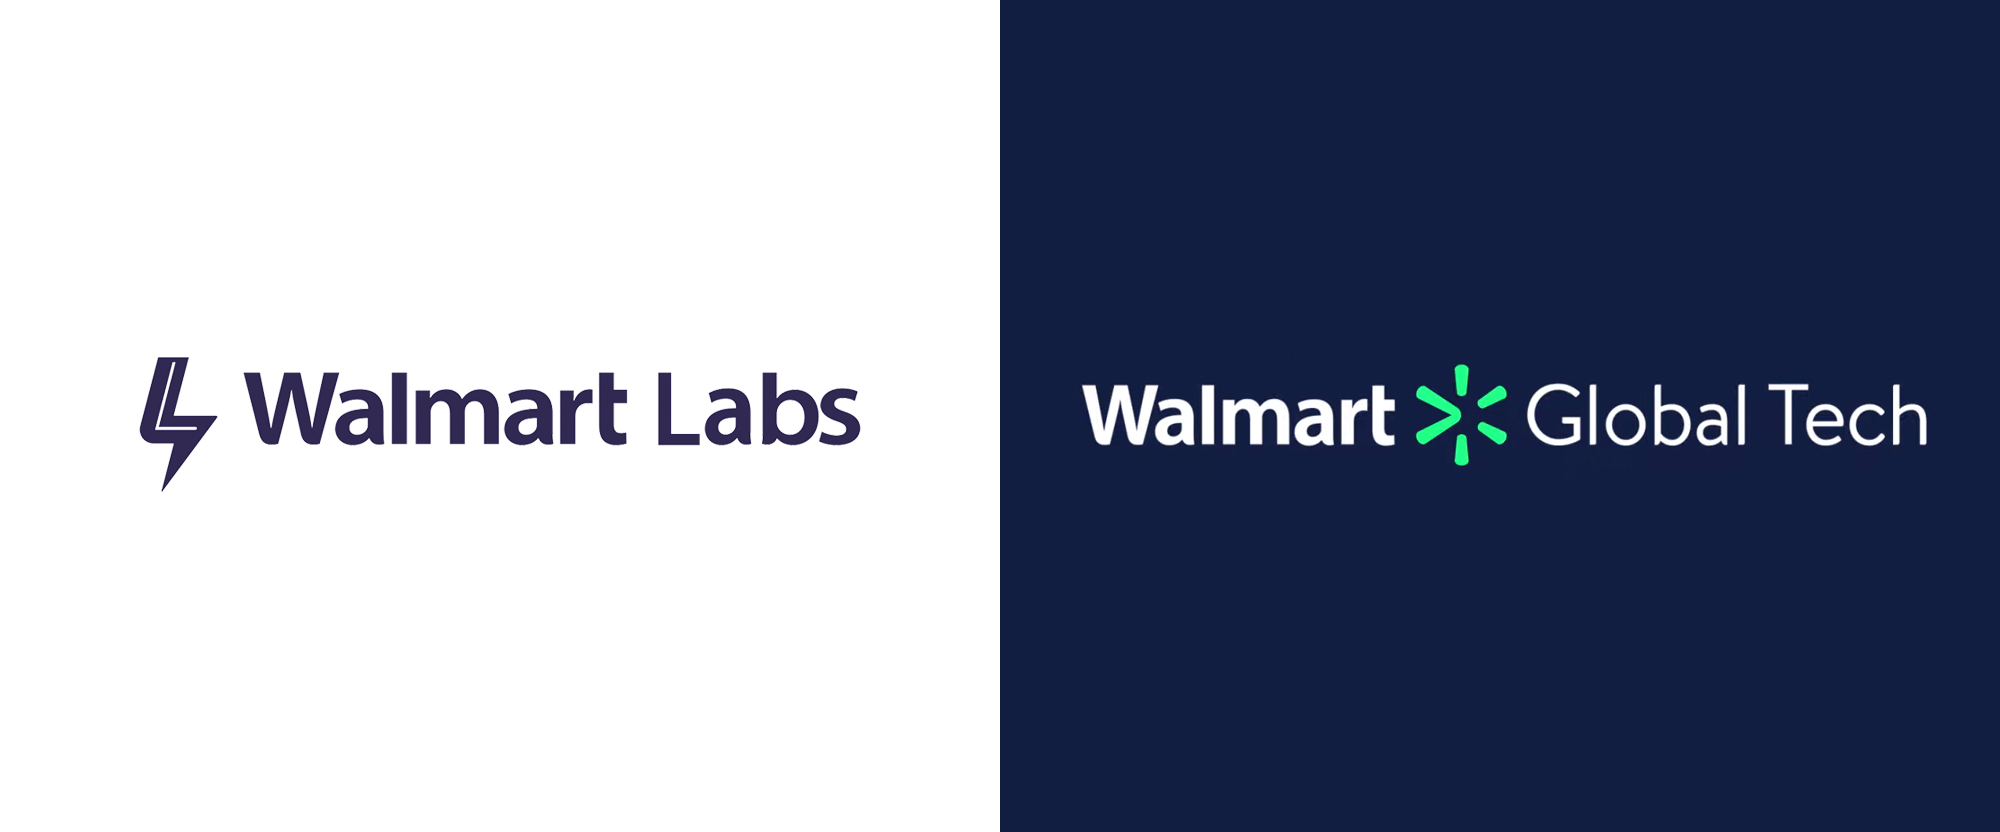 Brand New: New Name and Logo for Walmart Global Tech